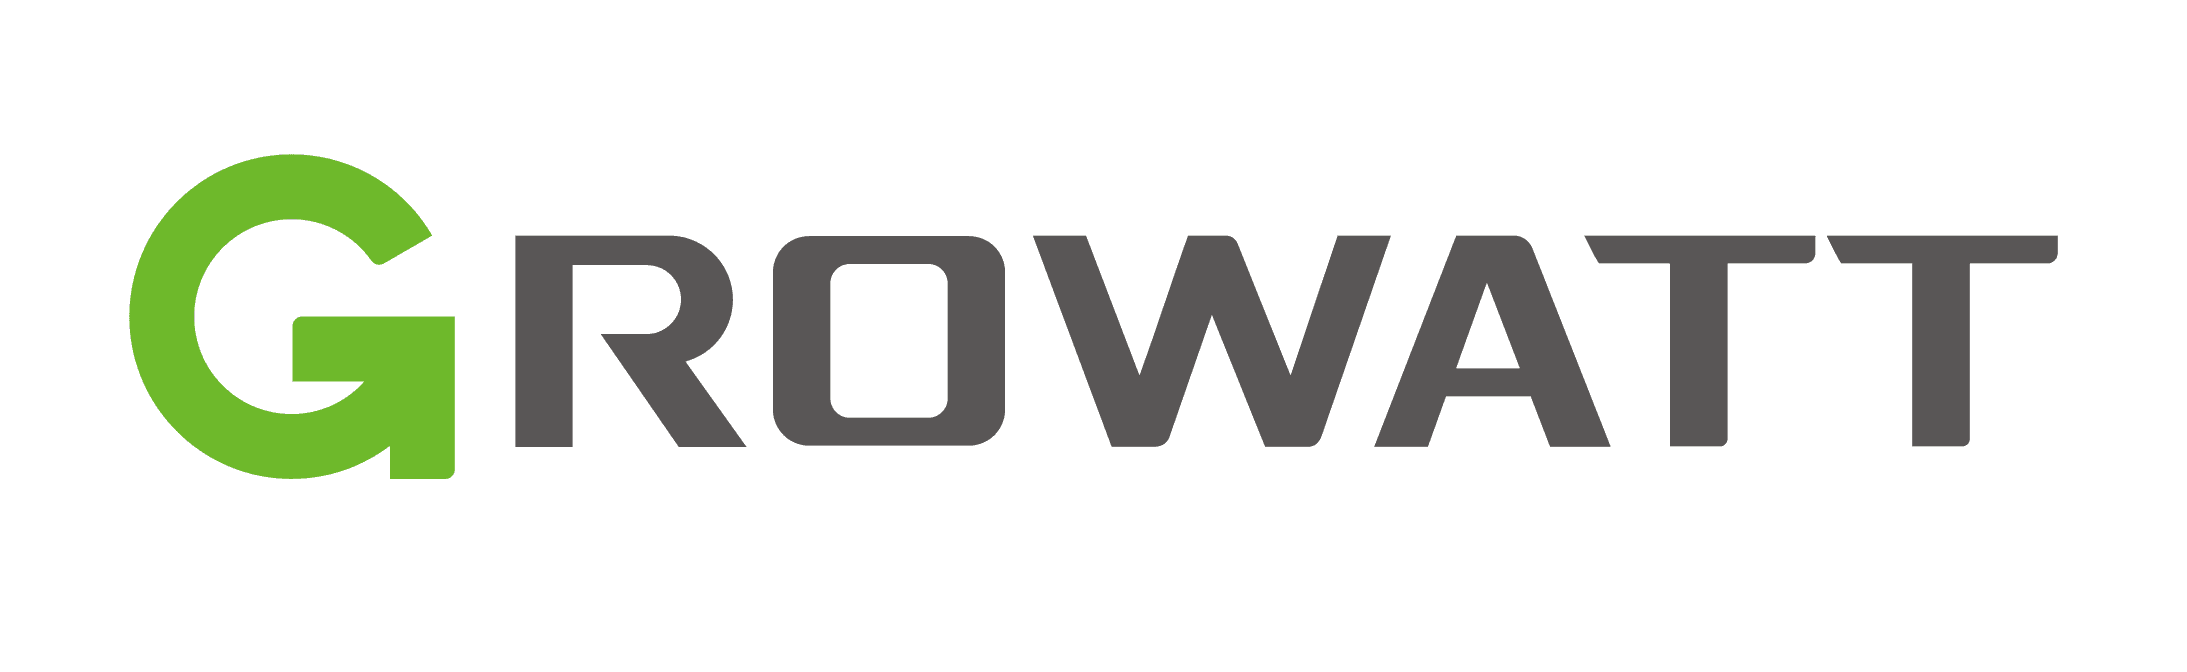 Growatt-logo.png